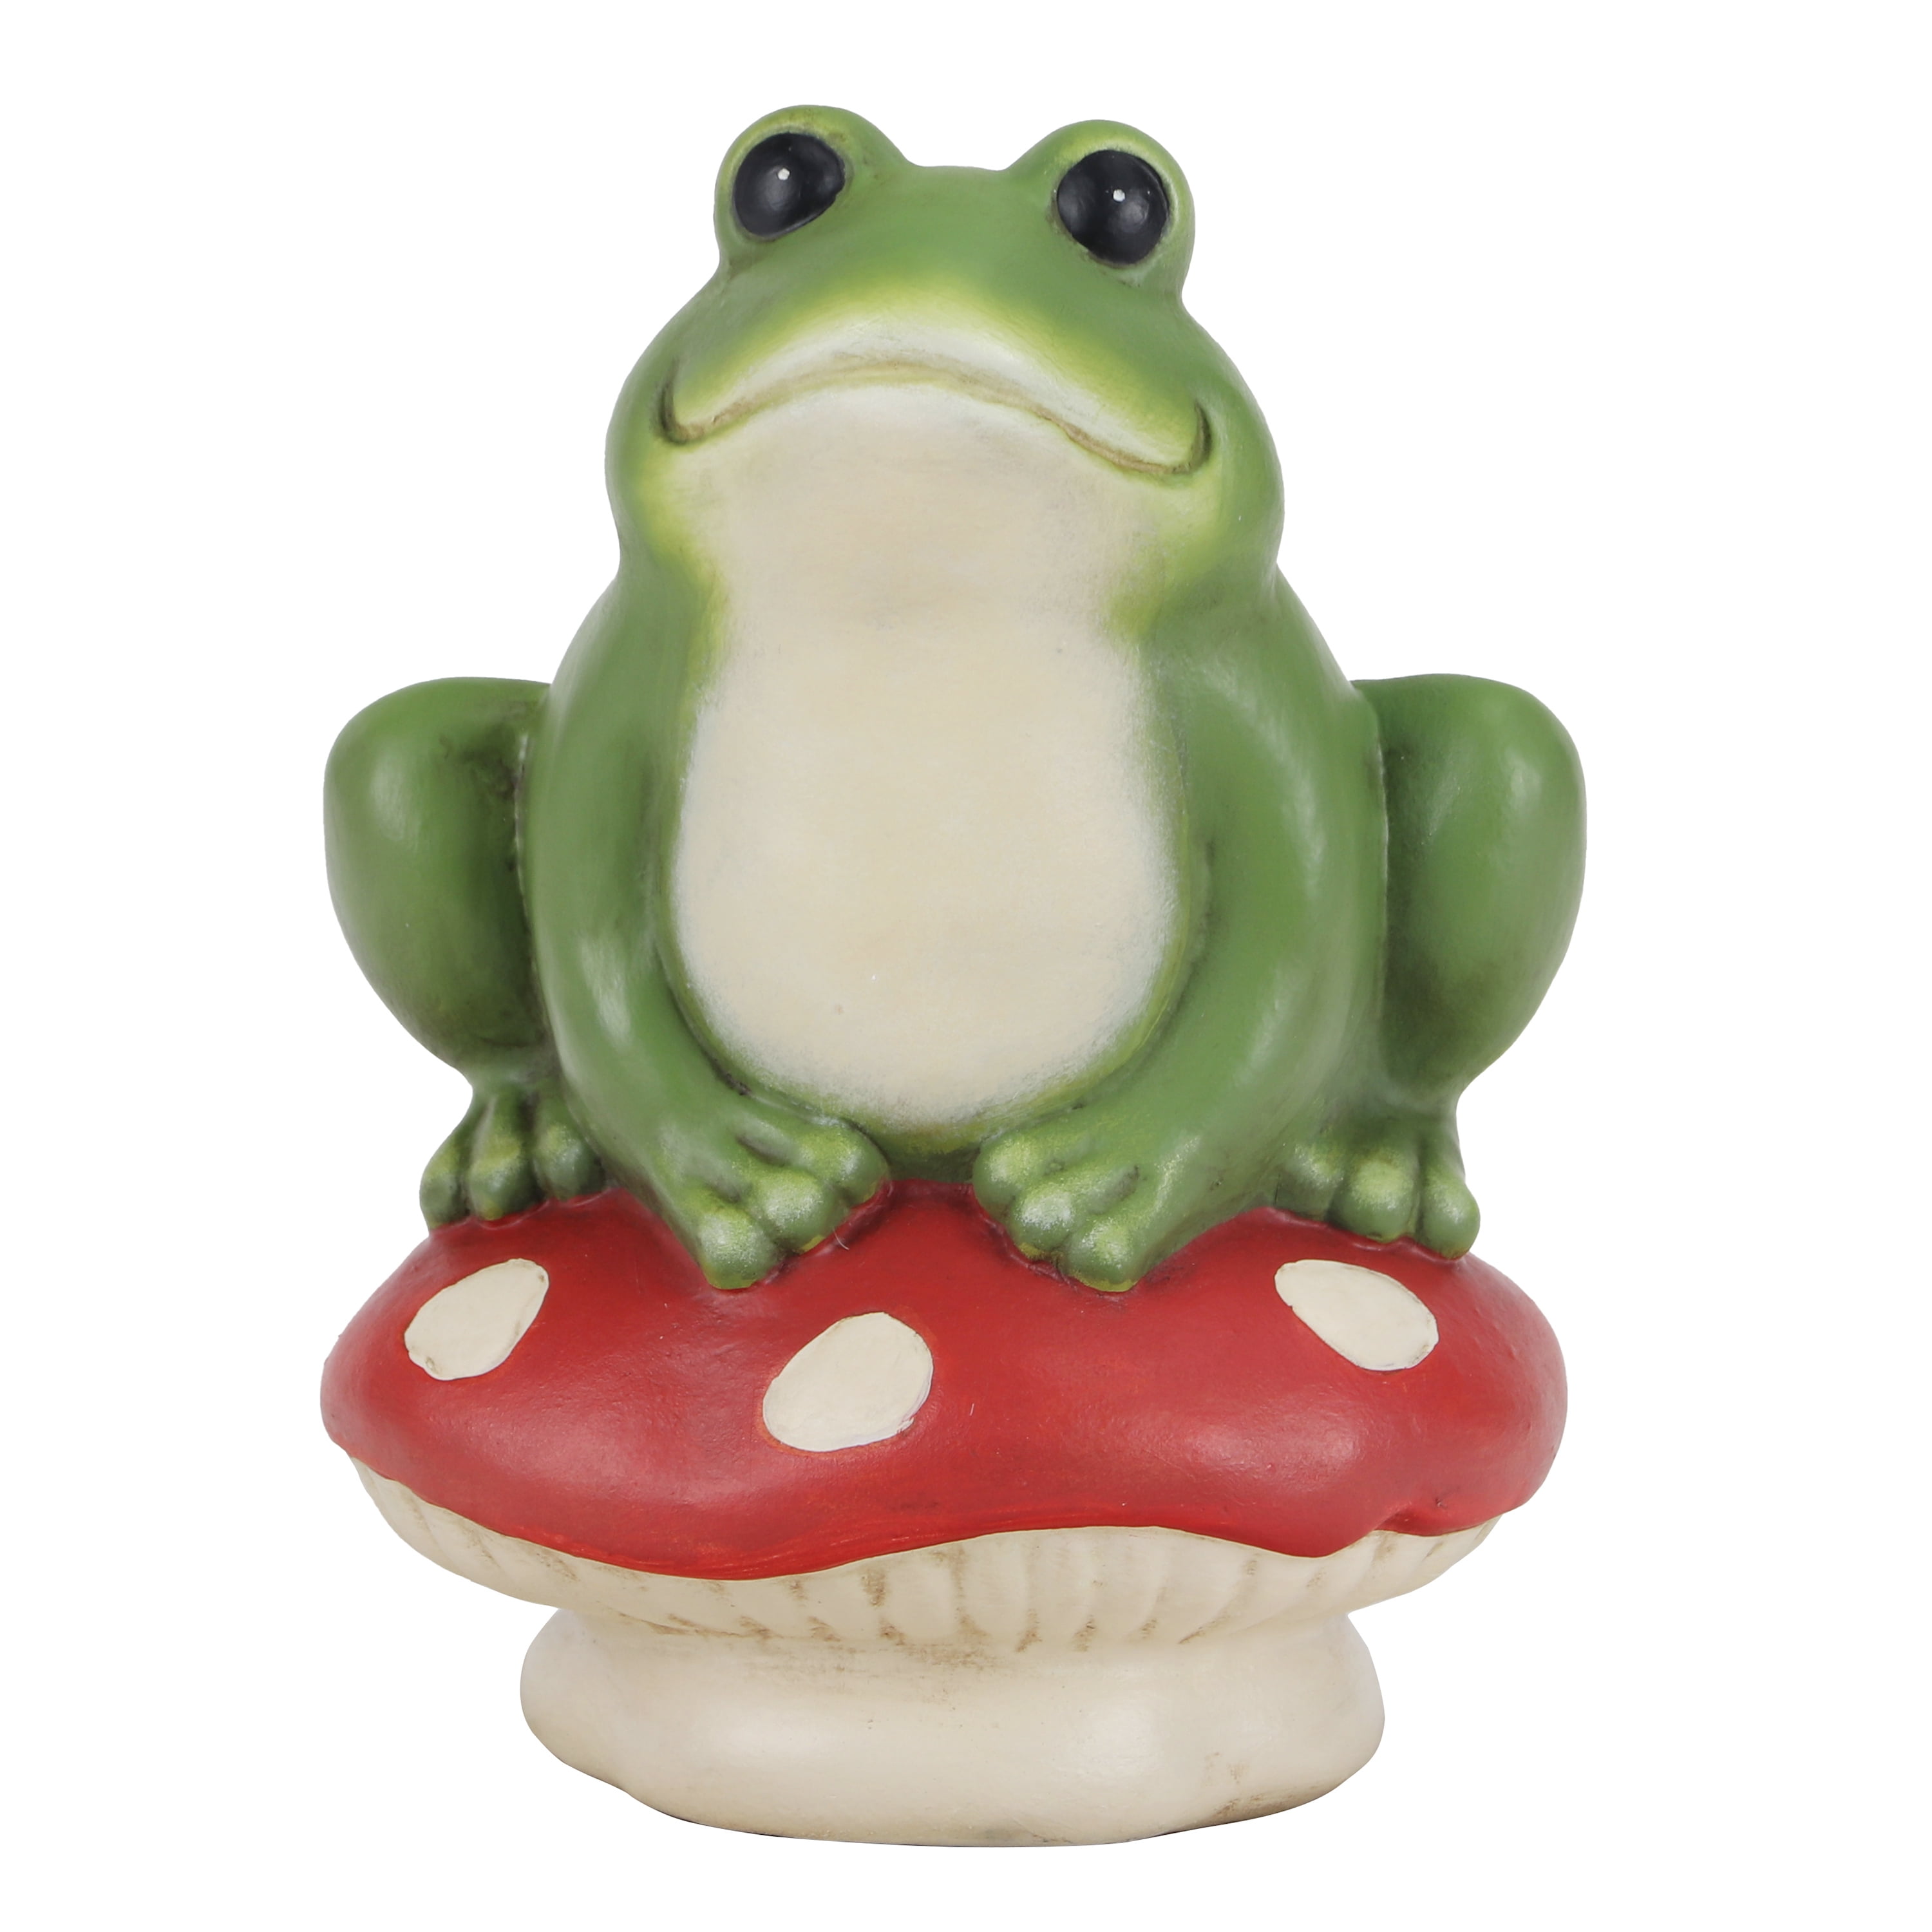 Mainstays Outdoor Frog on Red Mushroom Garden Statue, 6 in L x 4.75 in W x 8.5 in H